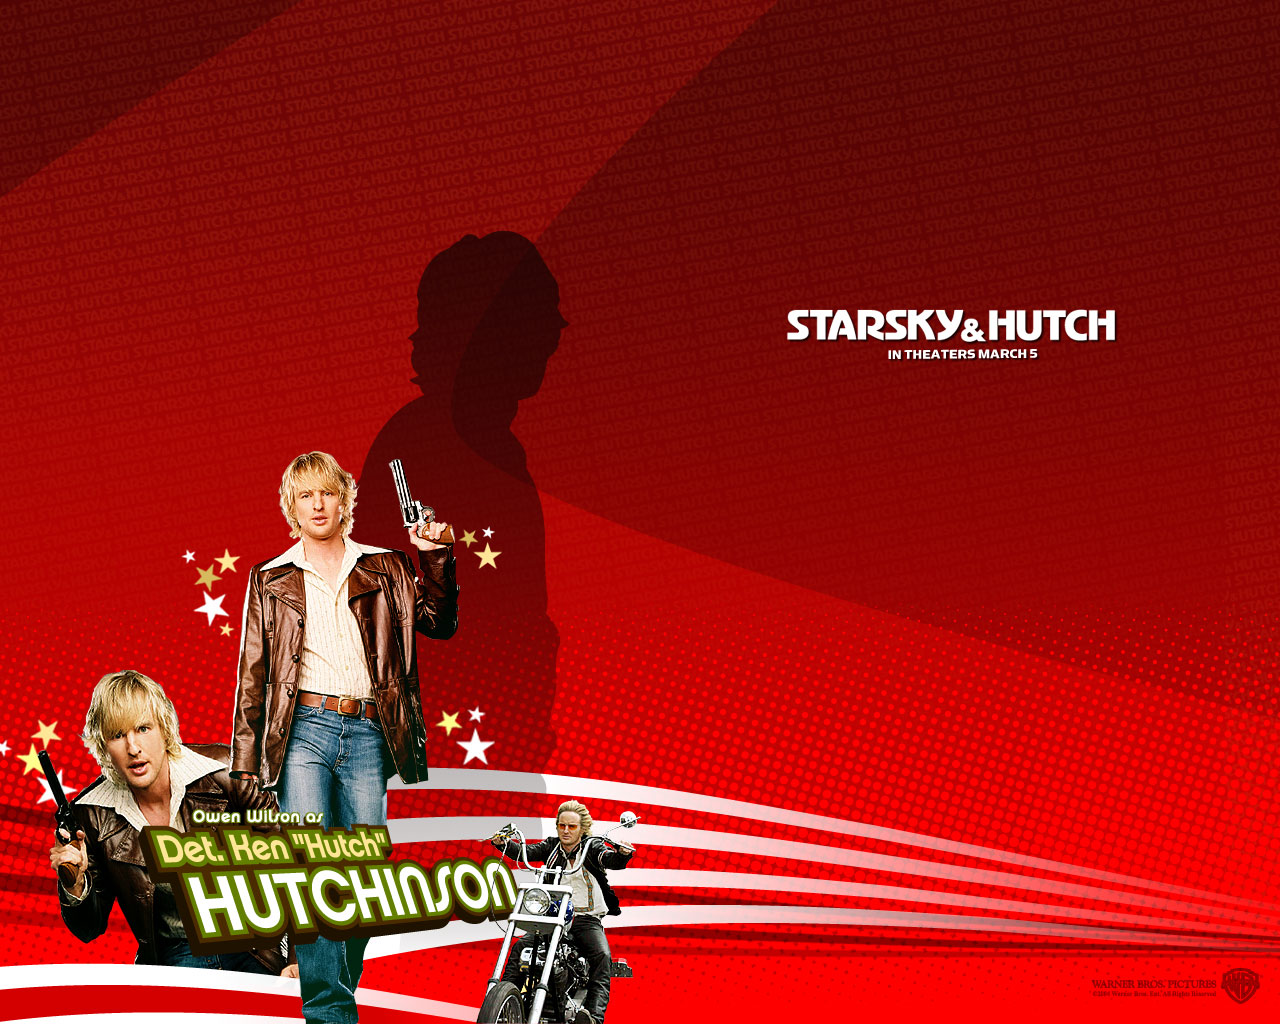 Starsky and hutch 3